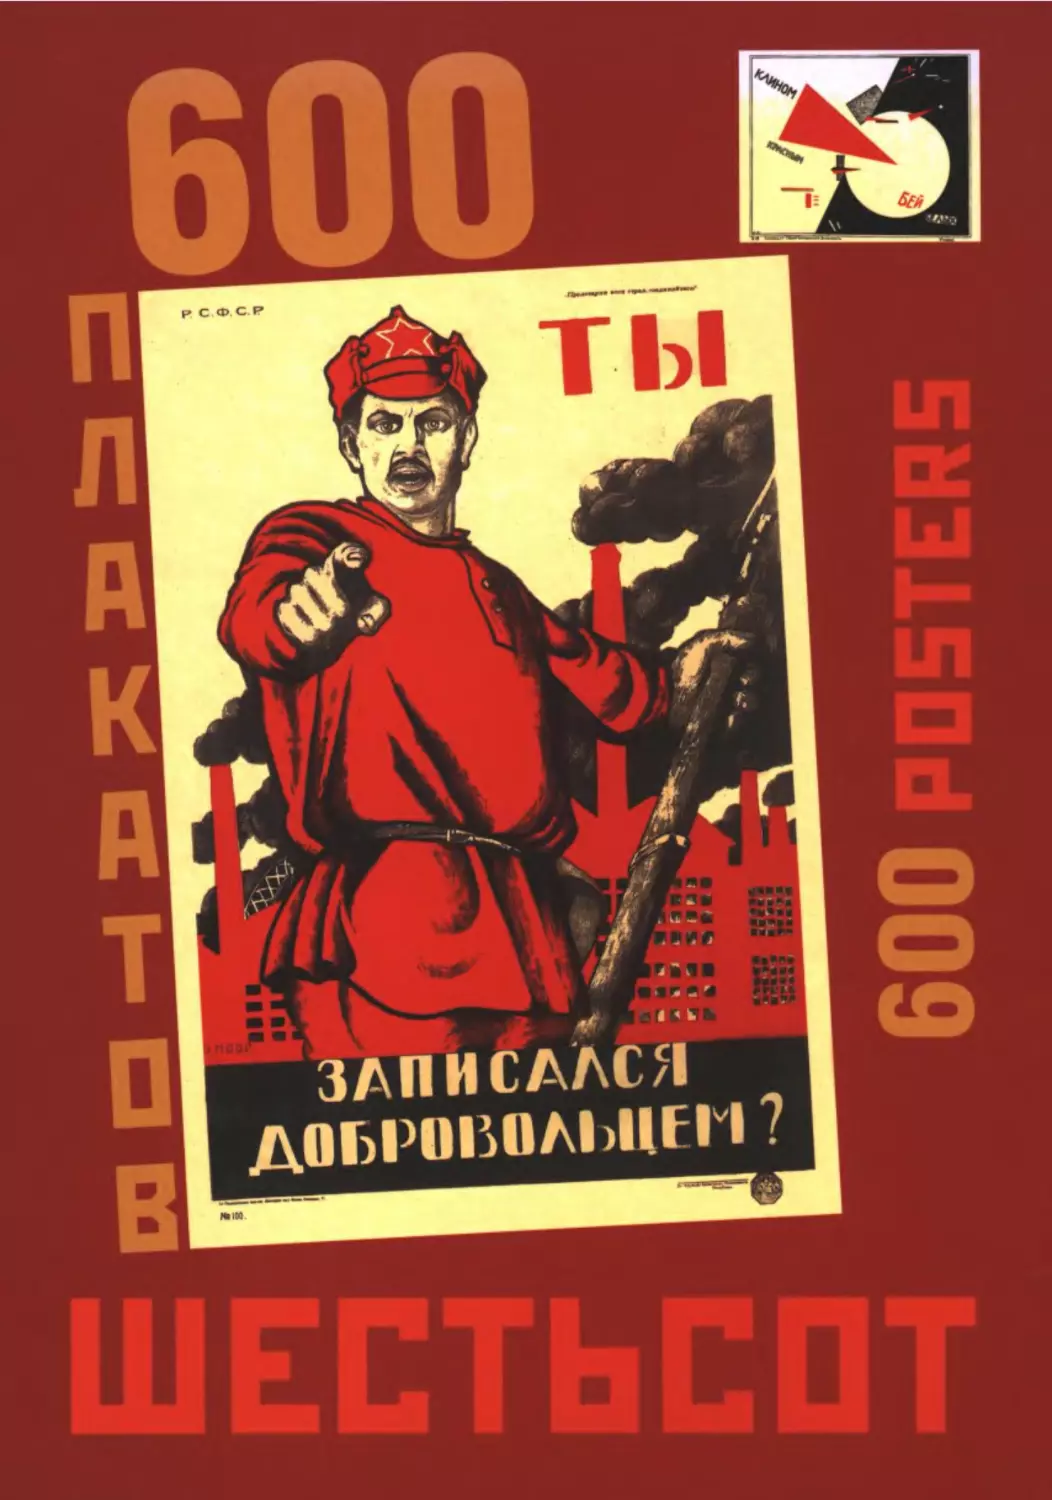 Ты записался добровольцем плакат. Советский рекламный плакат Снопков. Шклярука реклама в плакате. Плакаты pdf